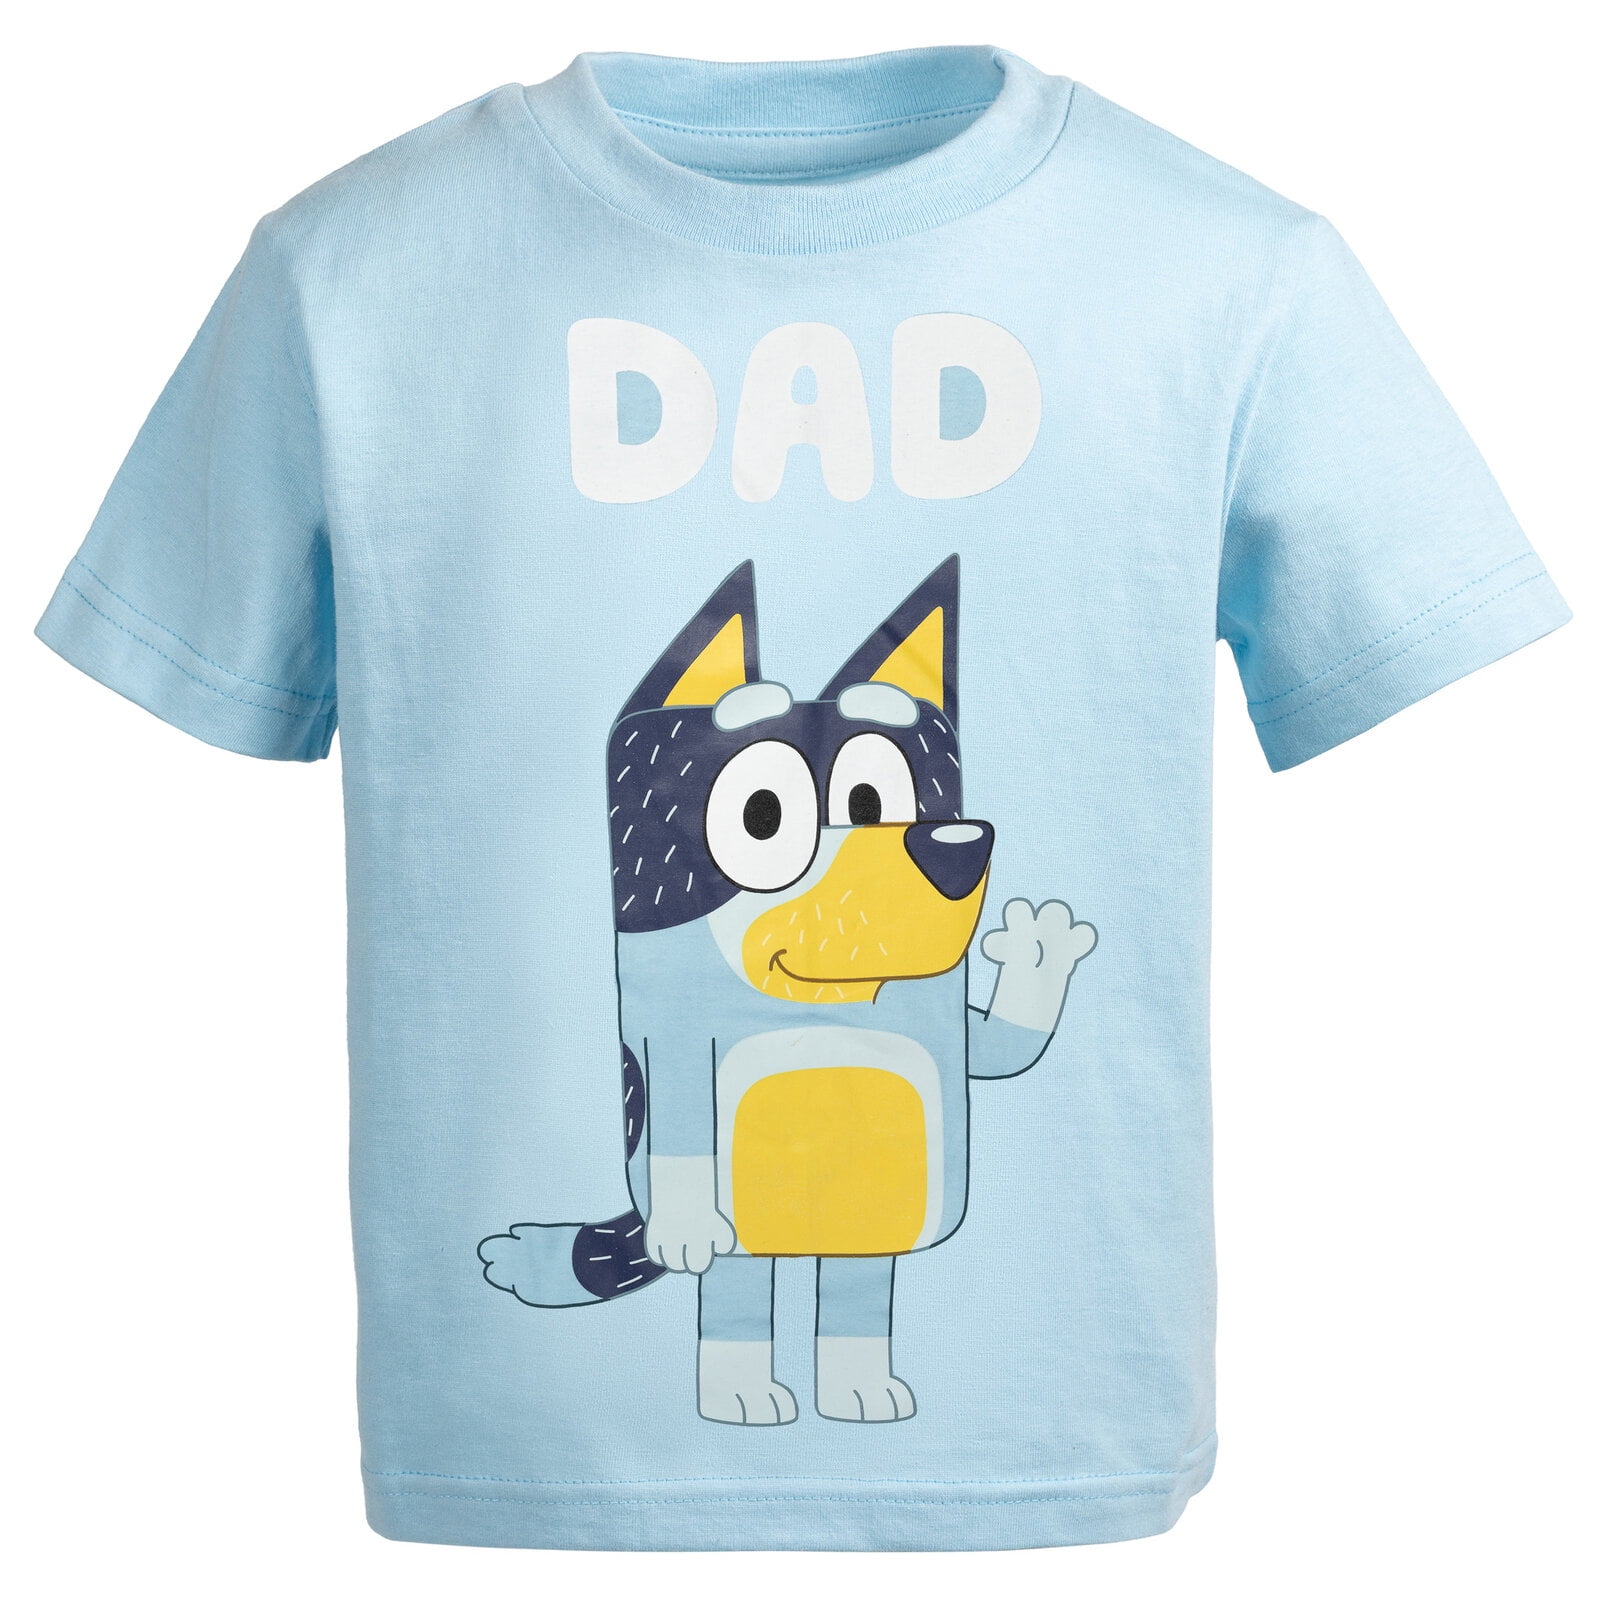  Bluey Dad Sweatshirt For Men, Bluey Dad Shirts For Men, Bluey  Shirt Adult, Bluey Shirt Sweatshirt, Dad Life Sweatshirt, Dad Gift Shirt,  Christmas Sweatshirt, Fathers Day Gift Shirt : Handmade Products